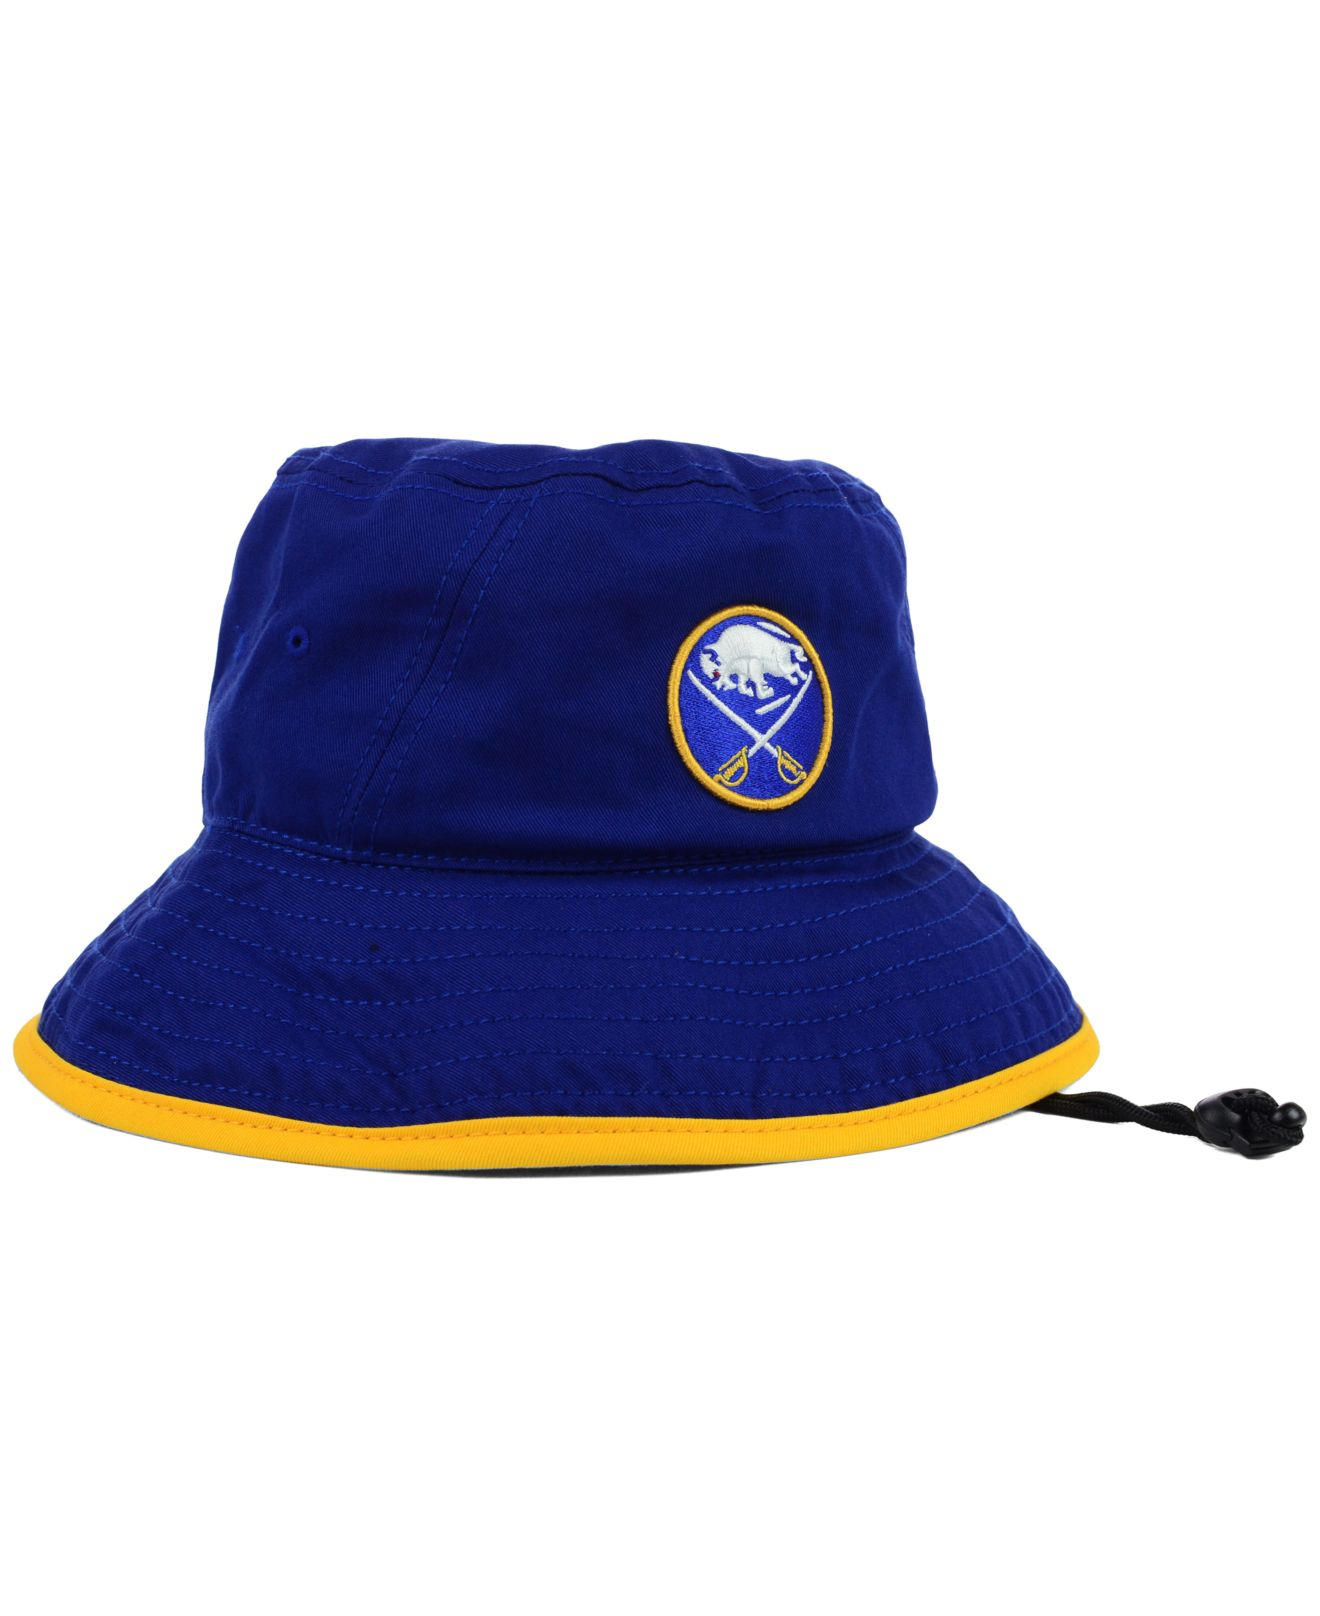 Lyst - Ktz Buffalo Sabres Basic Tipped Bucket Hat in Blue for Men